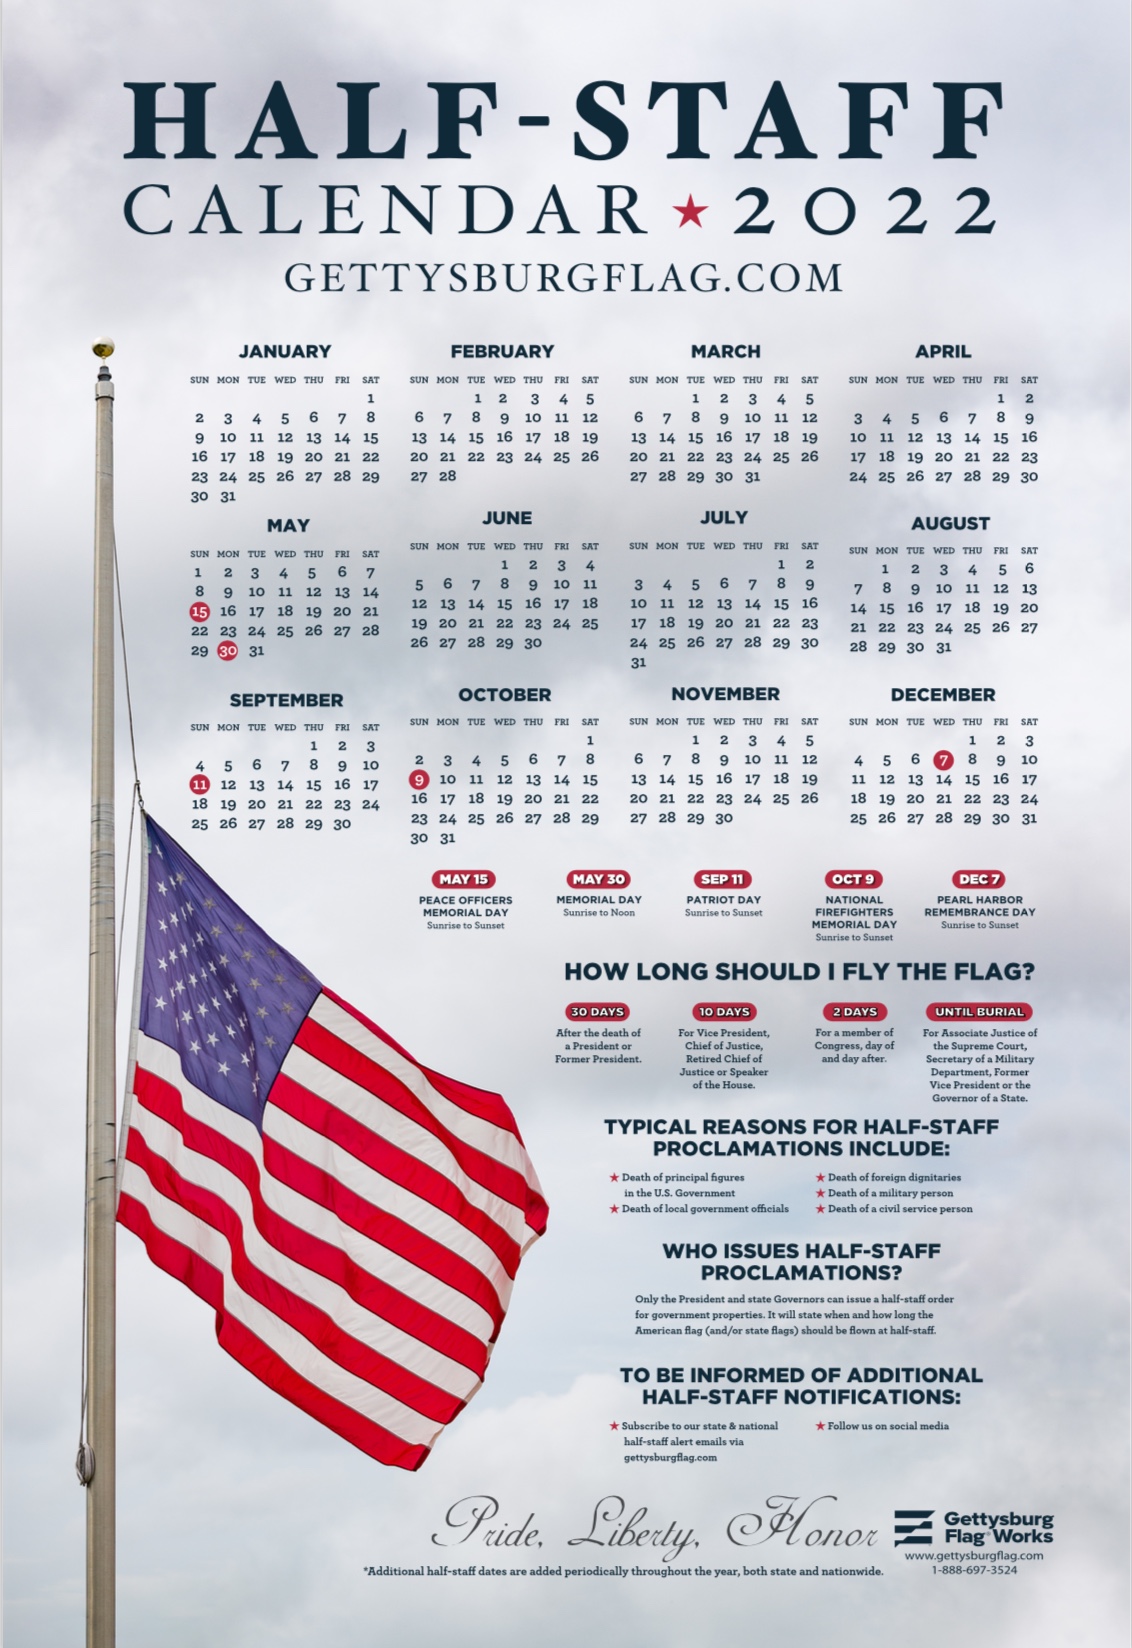 Gettysburg College Calendar 2022 2022 American Flag Half-Staff Calendar - Gettysburg Flag Worksgettysburg  Flag Works Blog